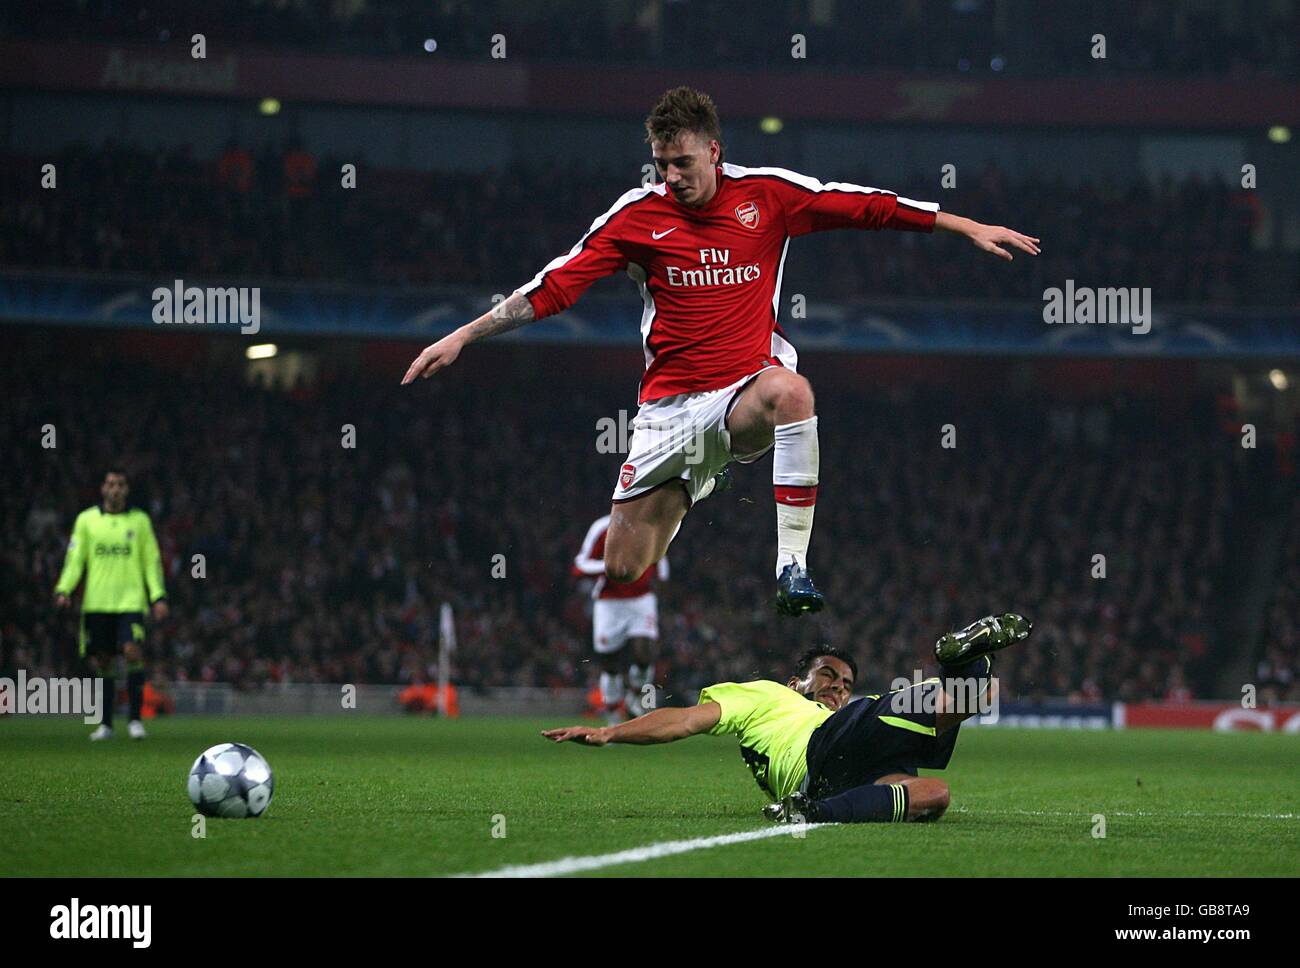 Football - UEFA Champions League - Groupe G - Arsenal / Fenerbahce - Emirates Stadium.Nicklas Bendtner d'Arsenal saute l'attaque de Selcuk Sahin de Fenerbahce Banque D'Images